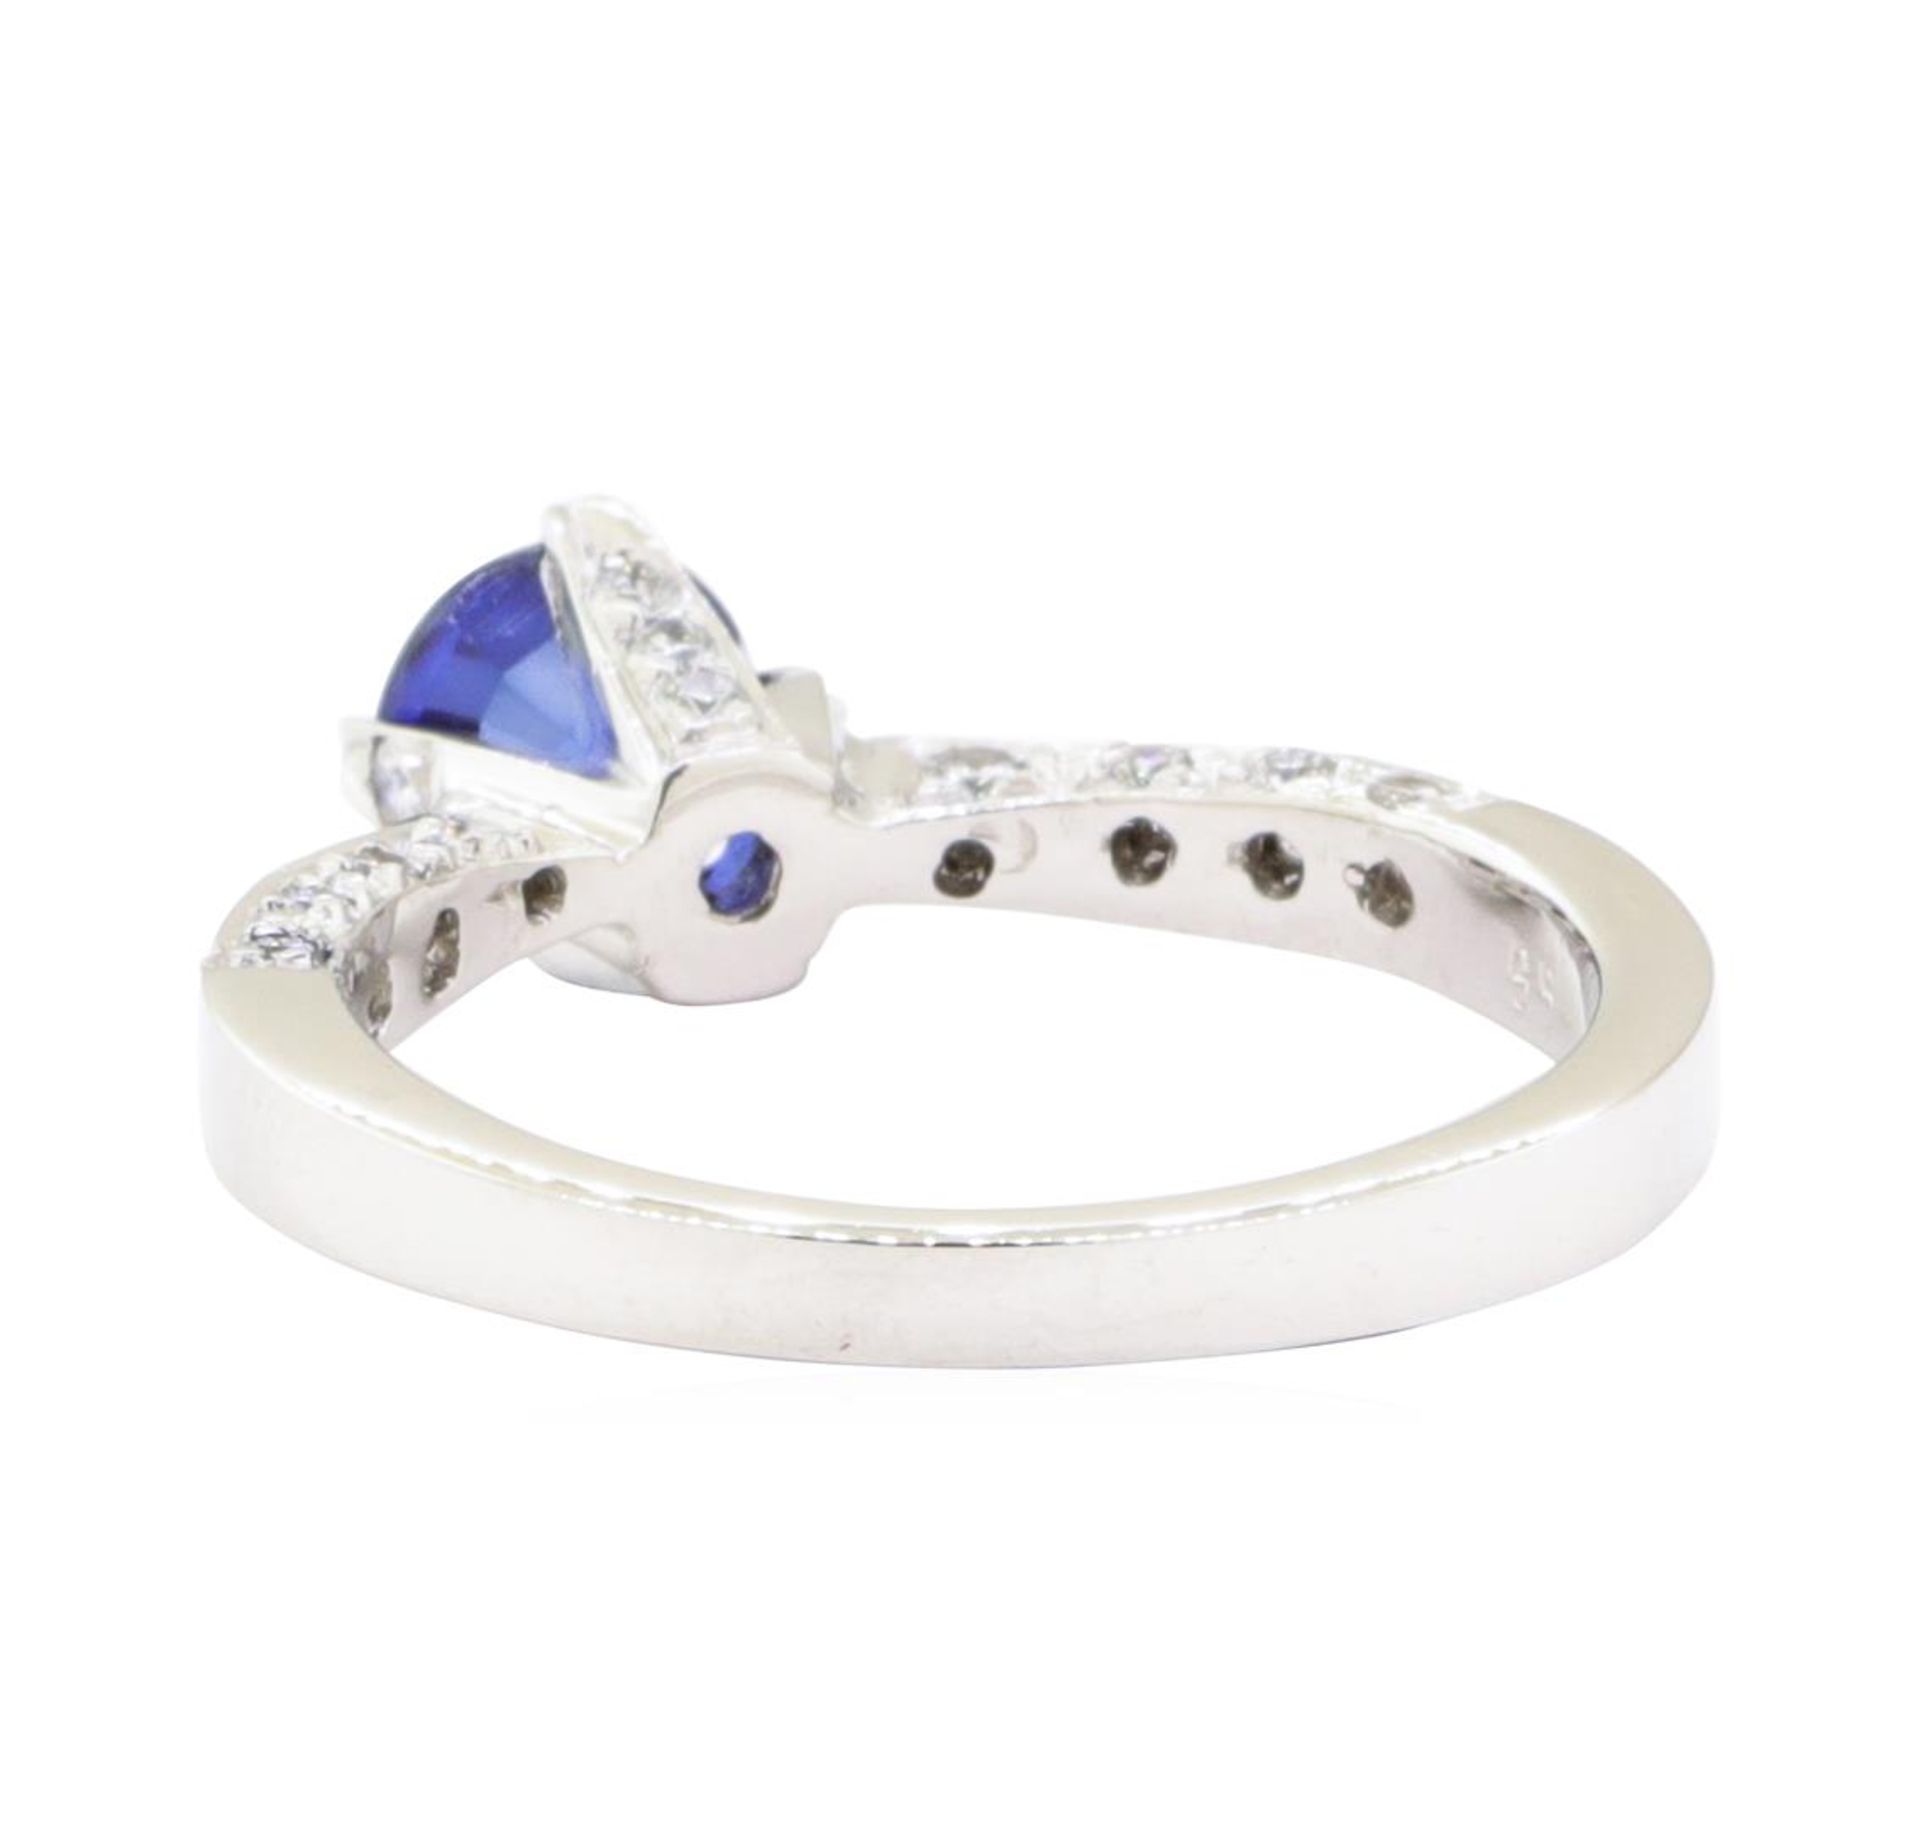 1.69 ctw Sapphire And Diamond Ring - Platinum - Image 3 of 5